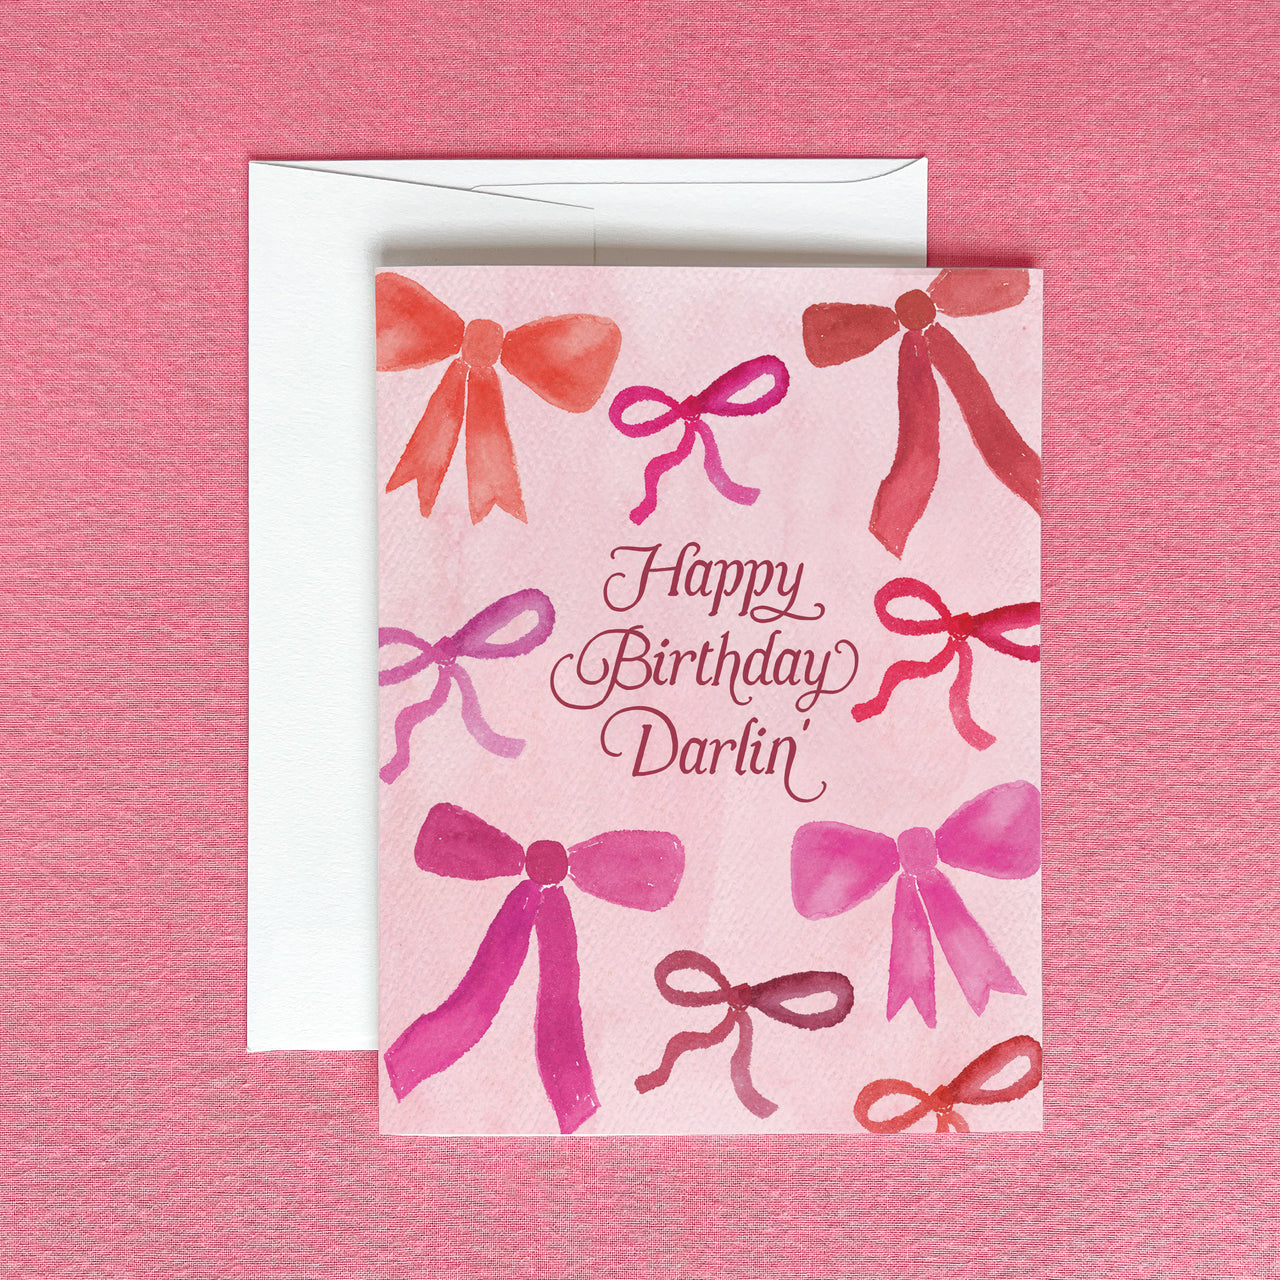 Happy Birthday Darlin' Greeting Card by Gert & Co